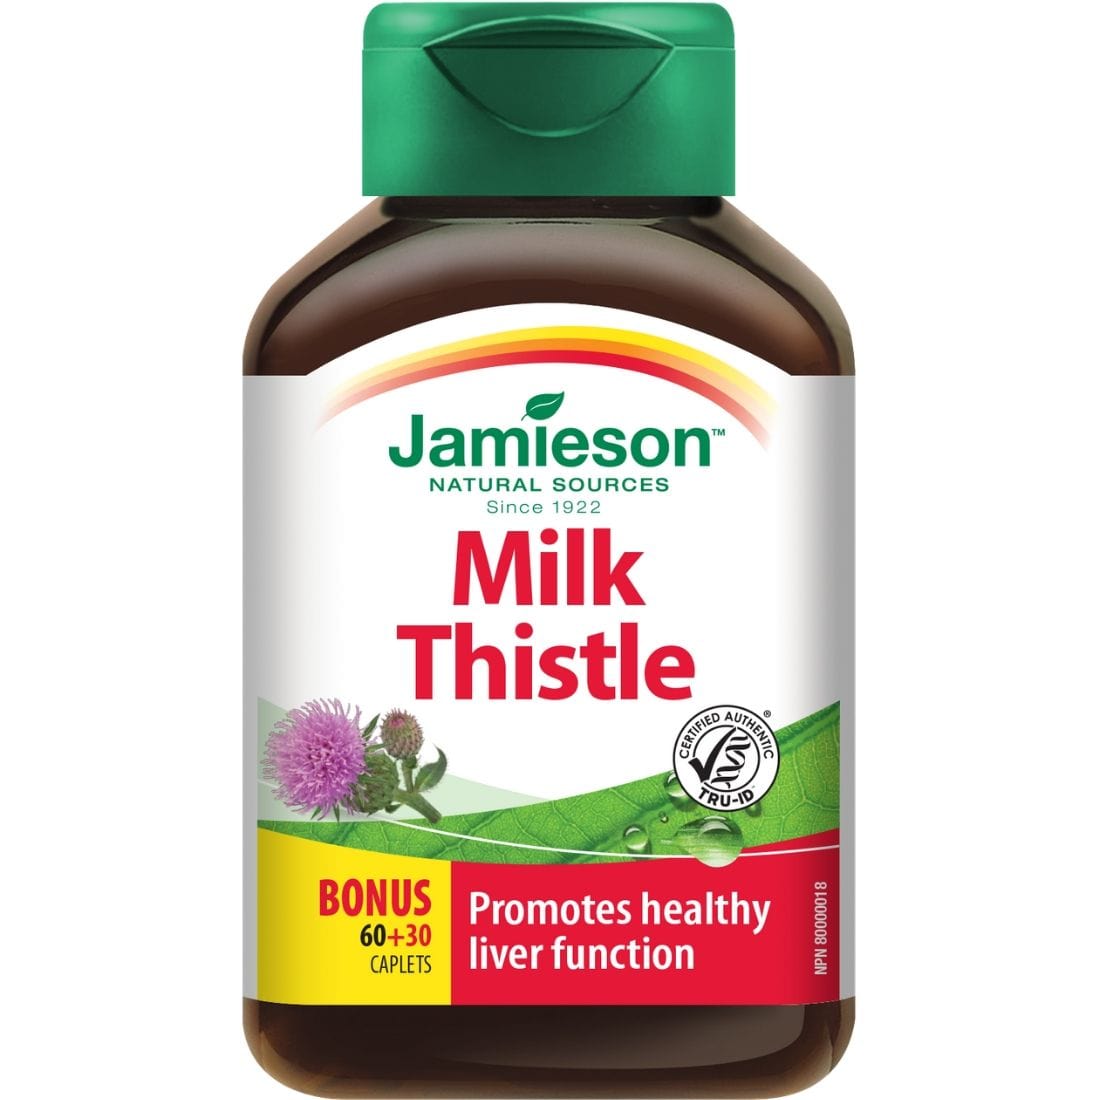 Jamieson Milk Thistle, 4500mg, 60+30 Free Caplets